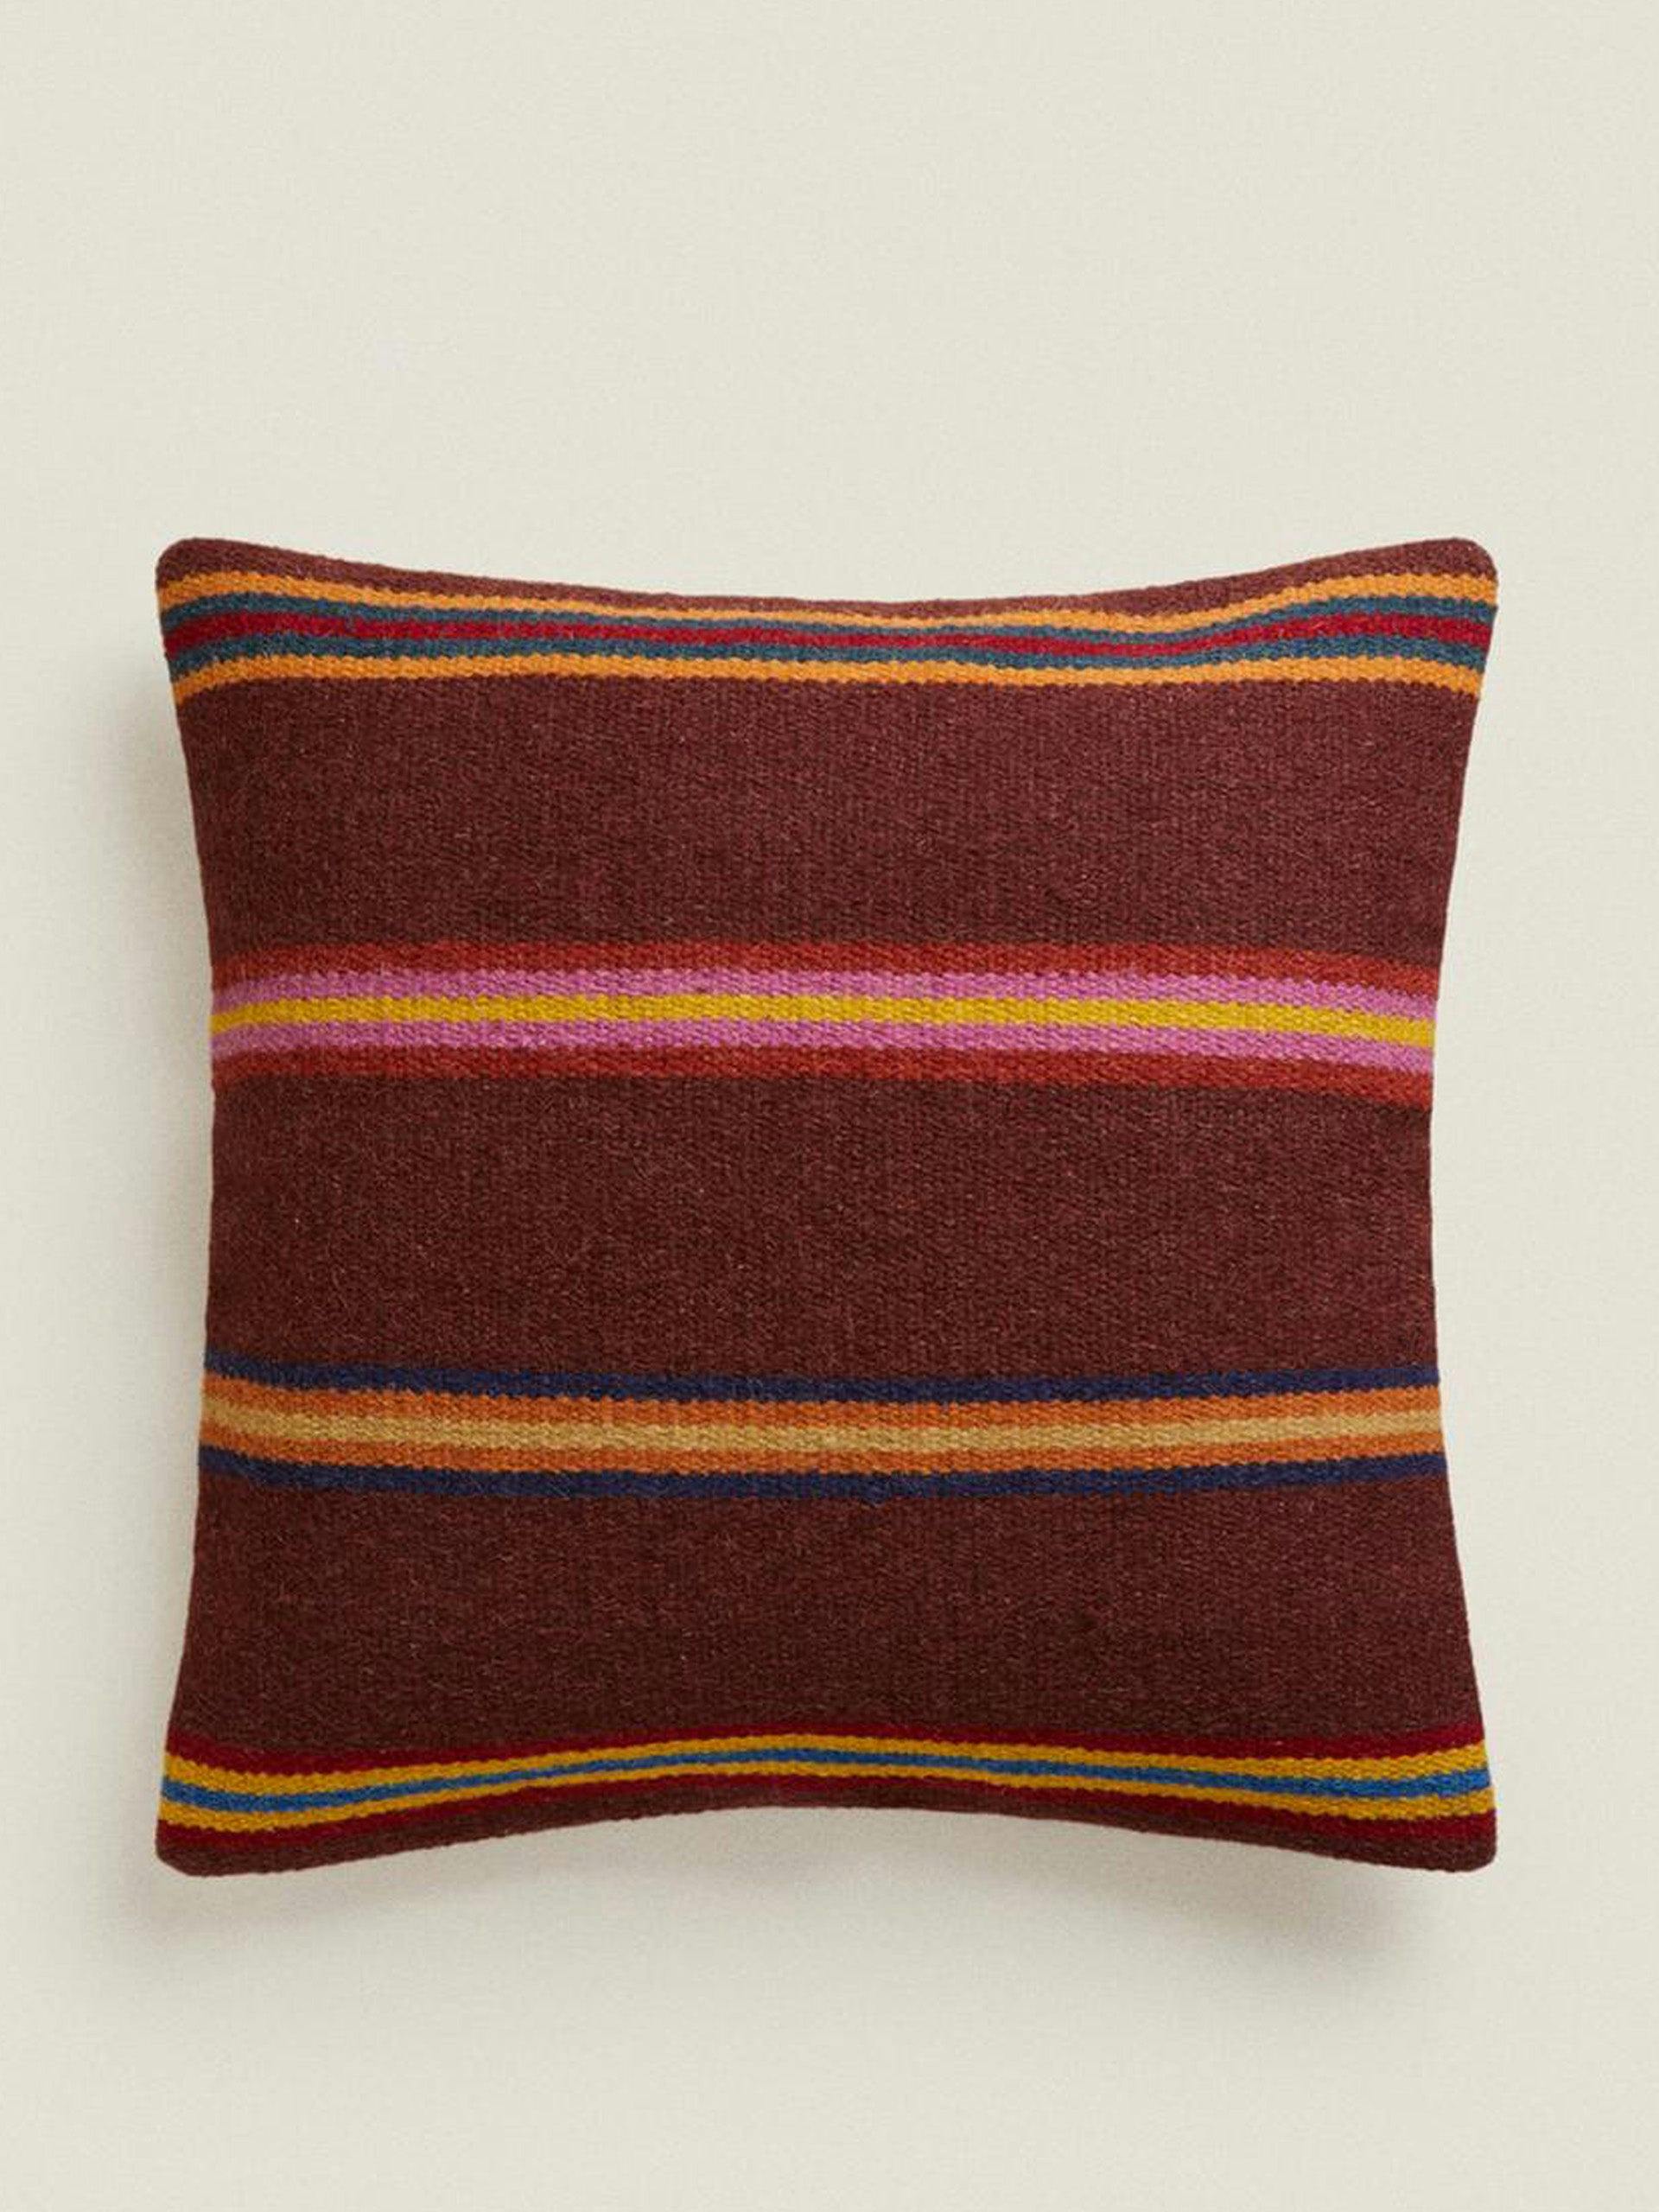 Striped woollen throw pillow cover